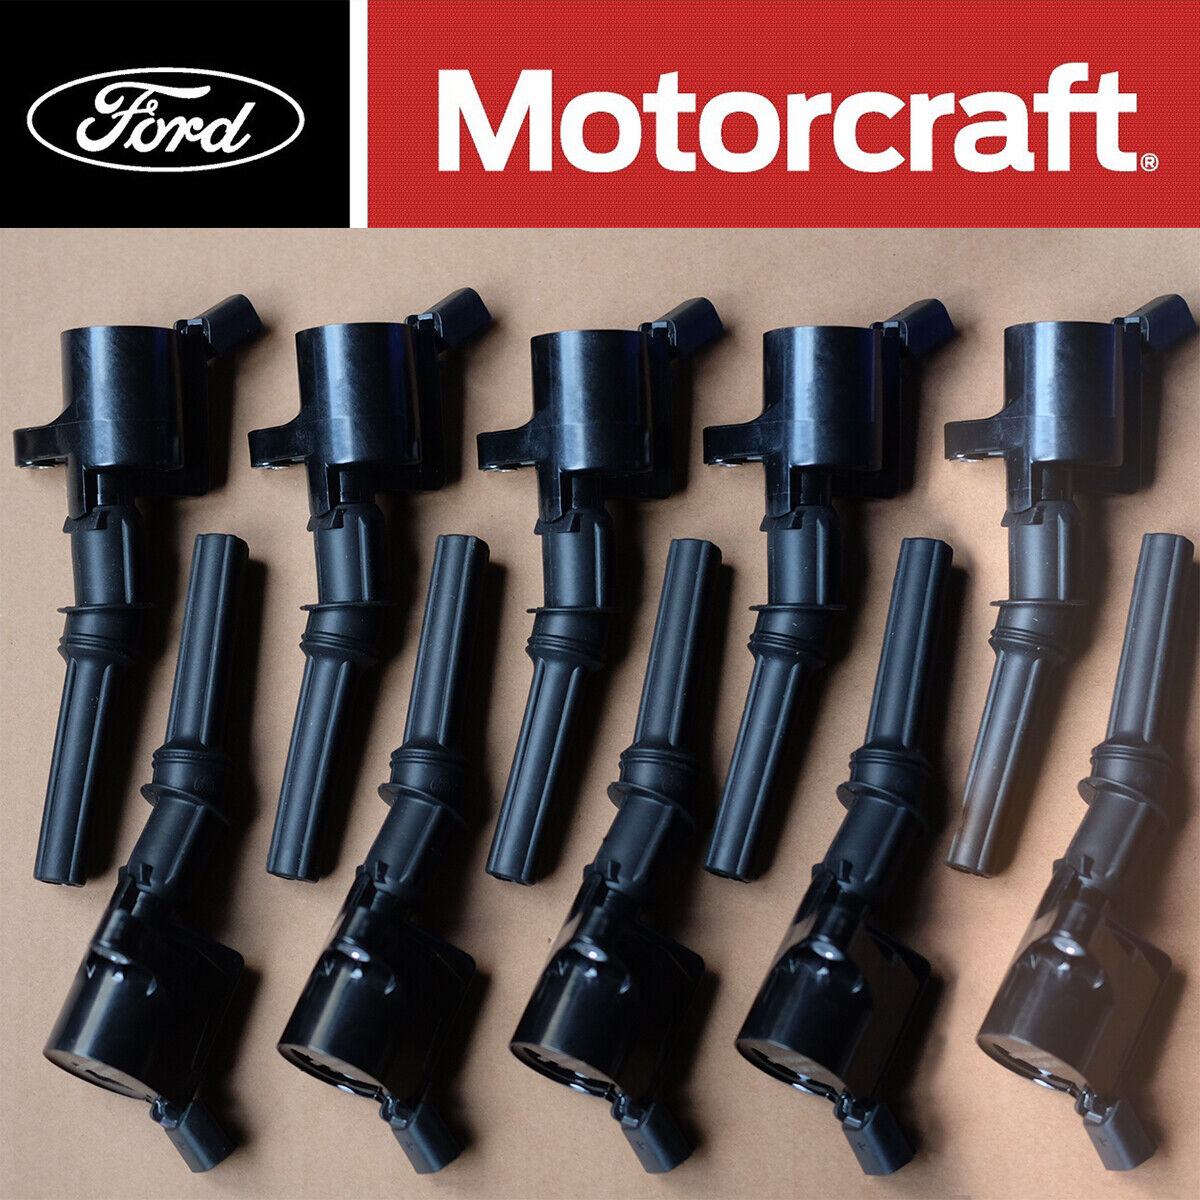 10PCS OEM DG508 Motorcraft Ignition Coils For Ford F150 4.6L 5.4L 6.8L NEW